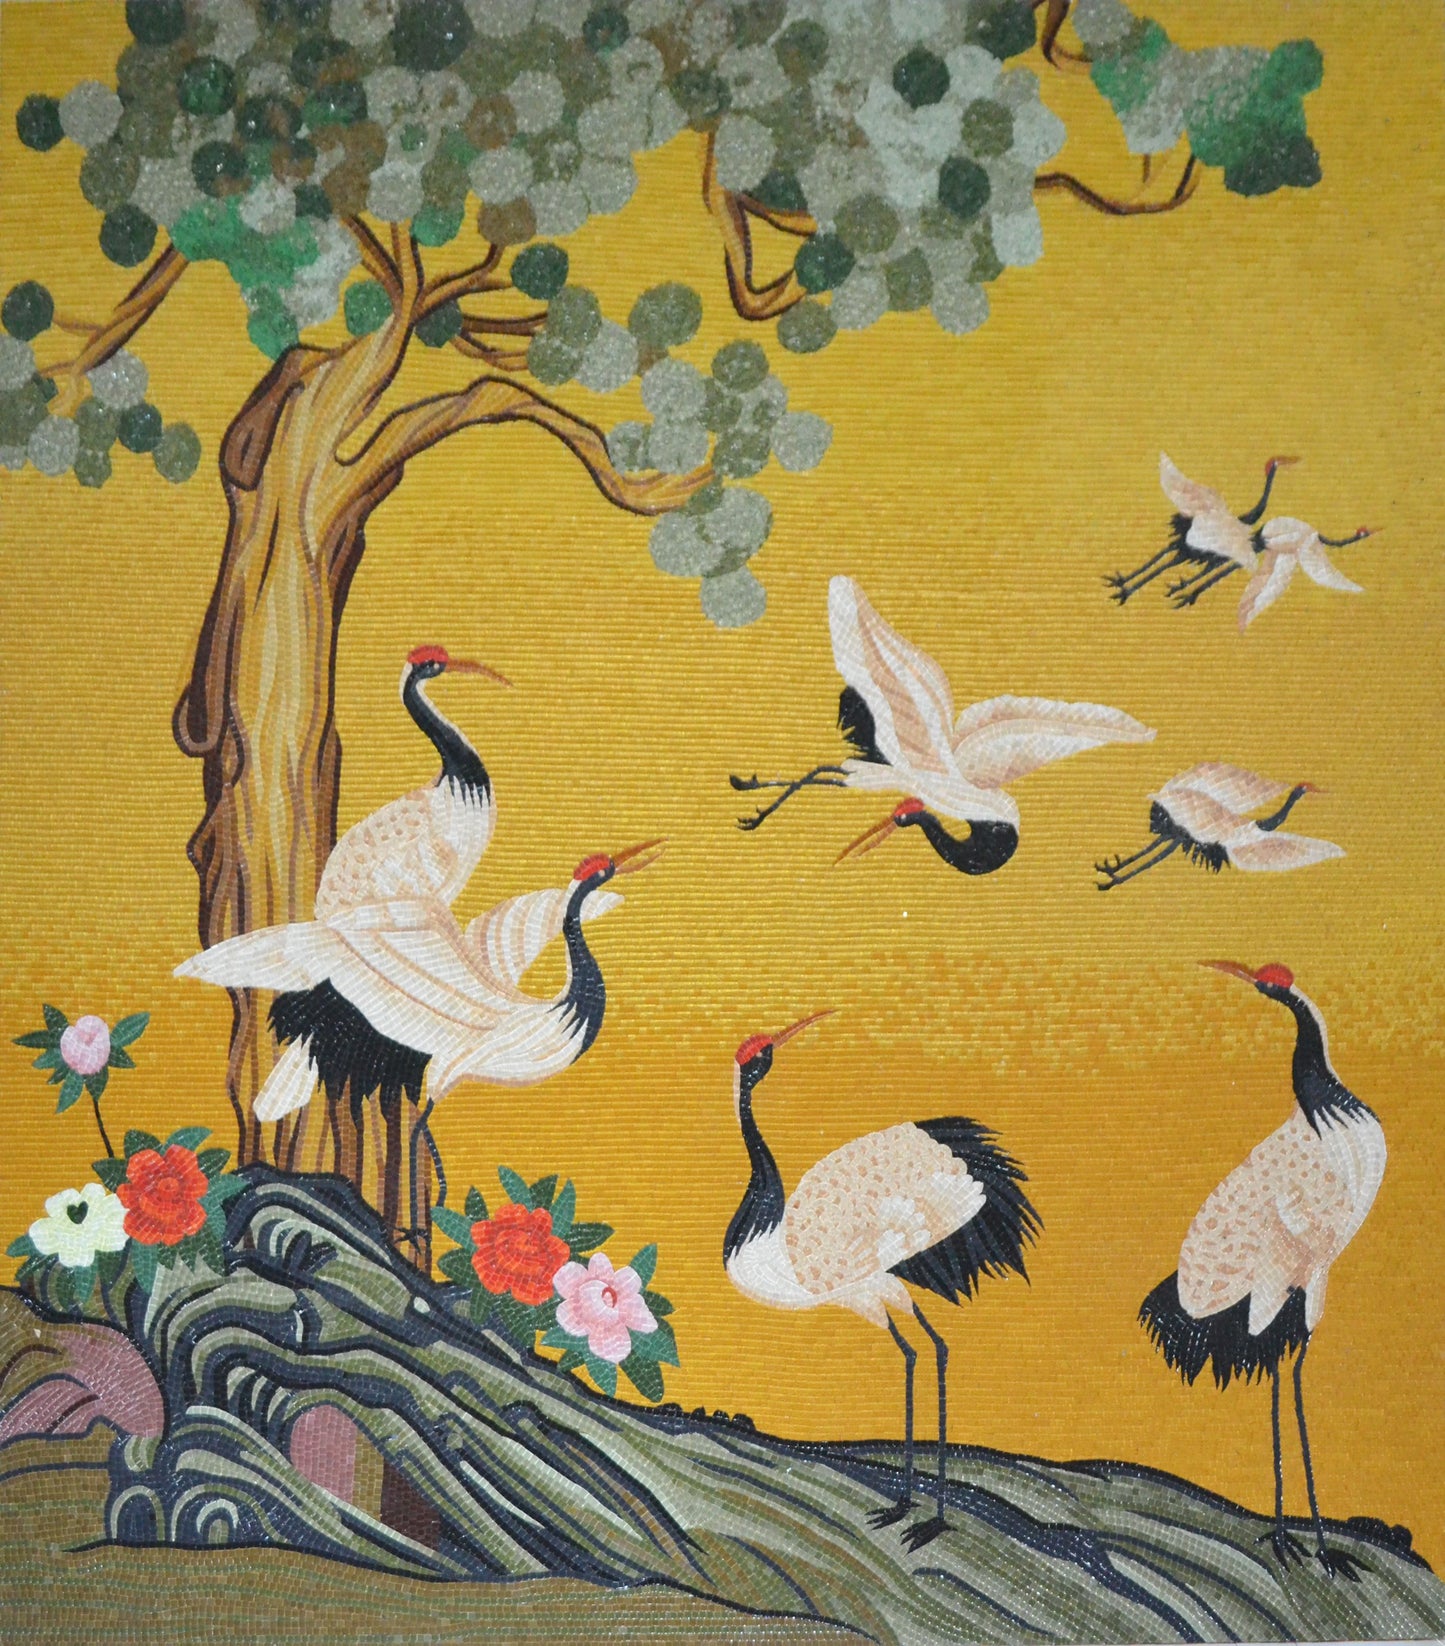 Heron Below the Tree: Glass Bird Mosaic Tile